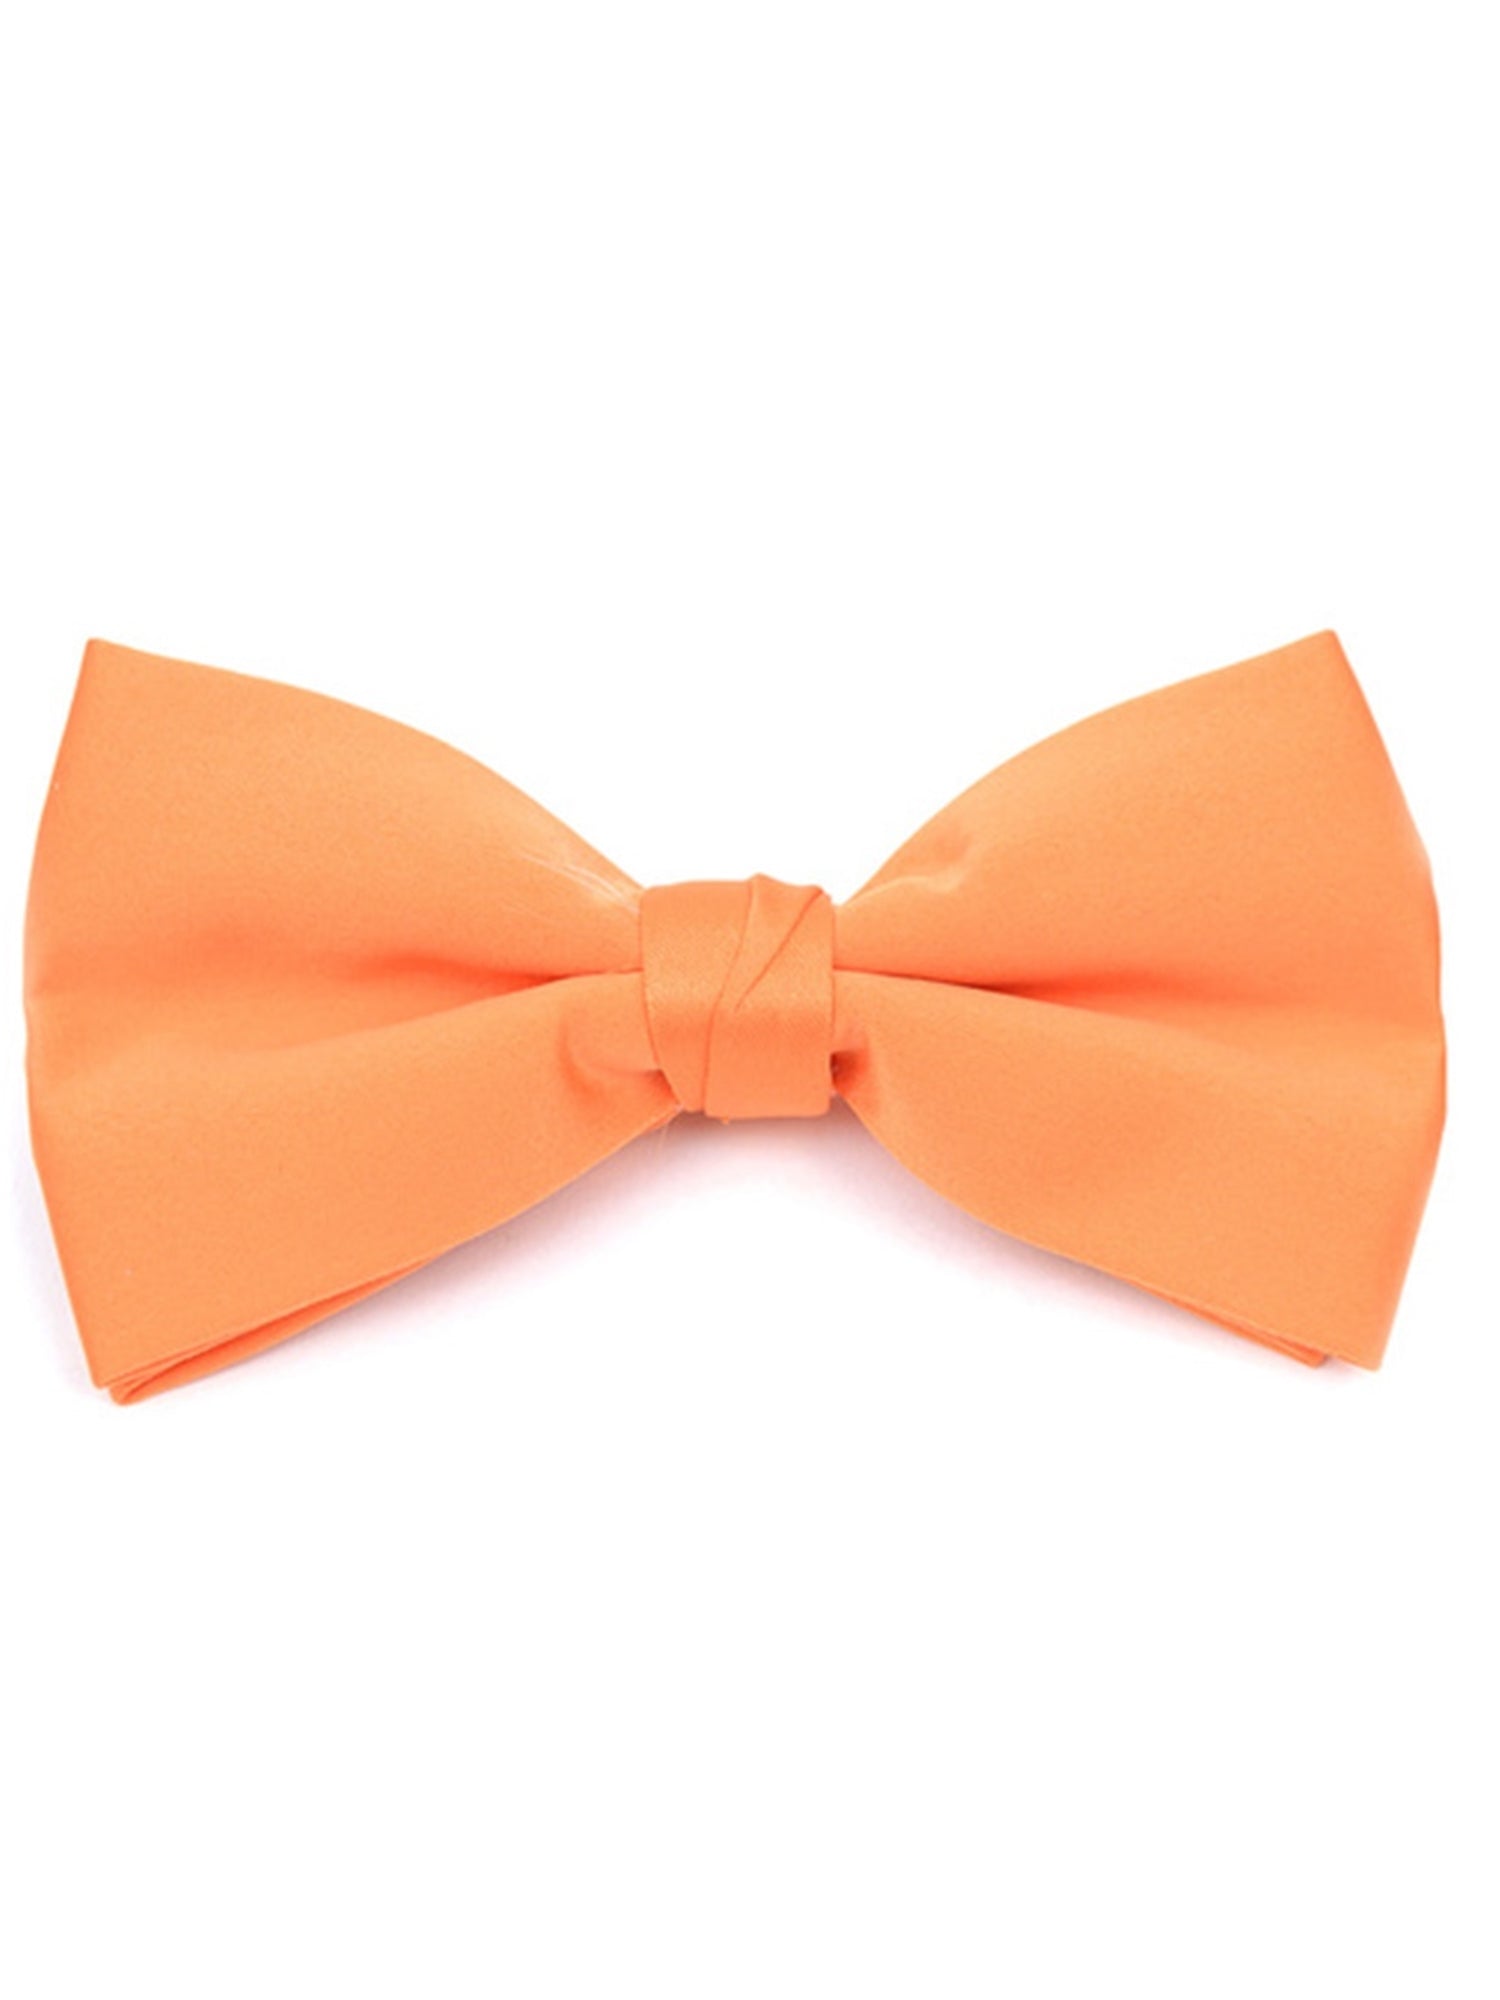 Men's Pre-tied Clip On Bow Tie - Formal Tuxedo Solid Color Men's Solid Color Bow Tie TheDapperTie Orange One Size 